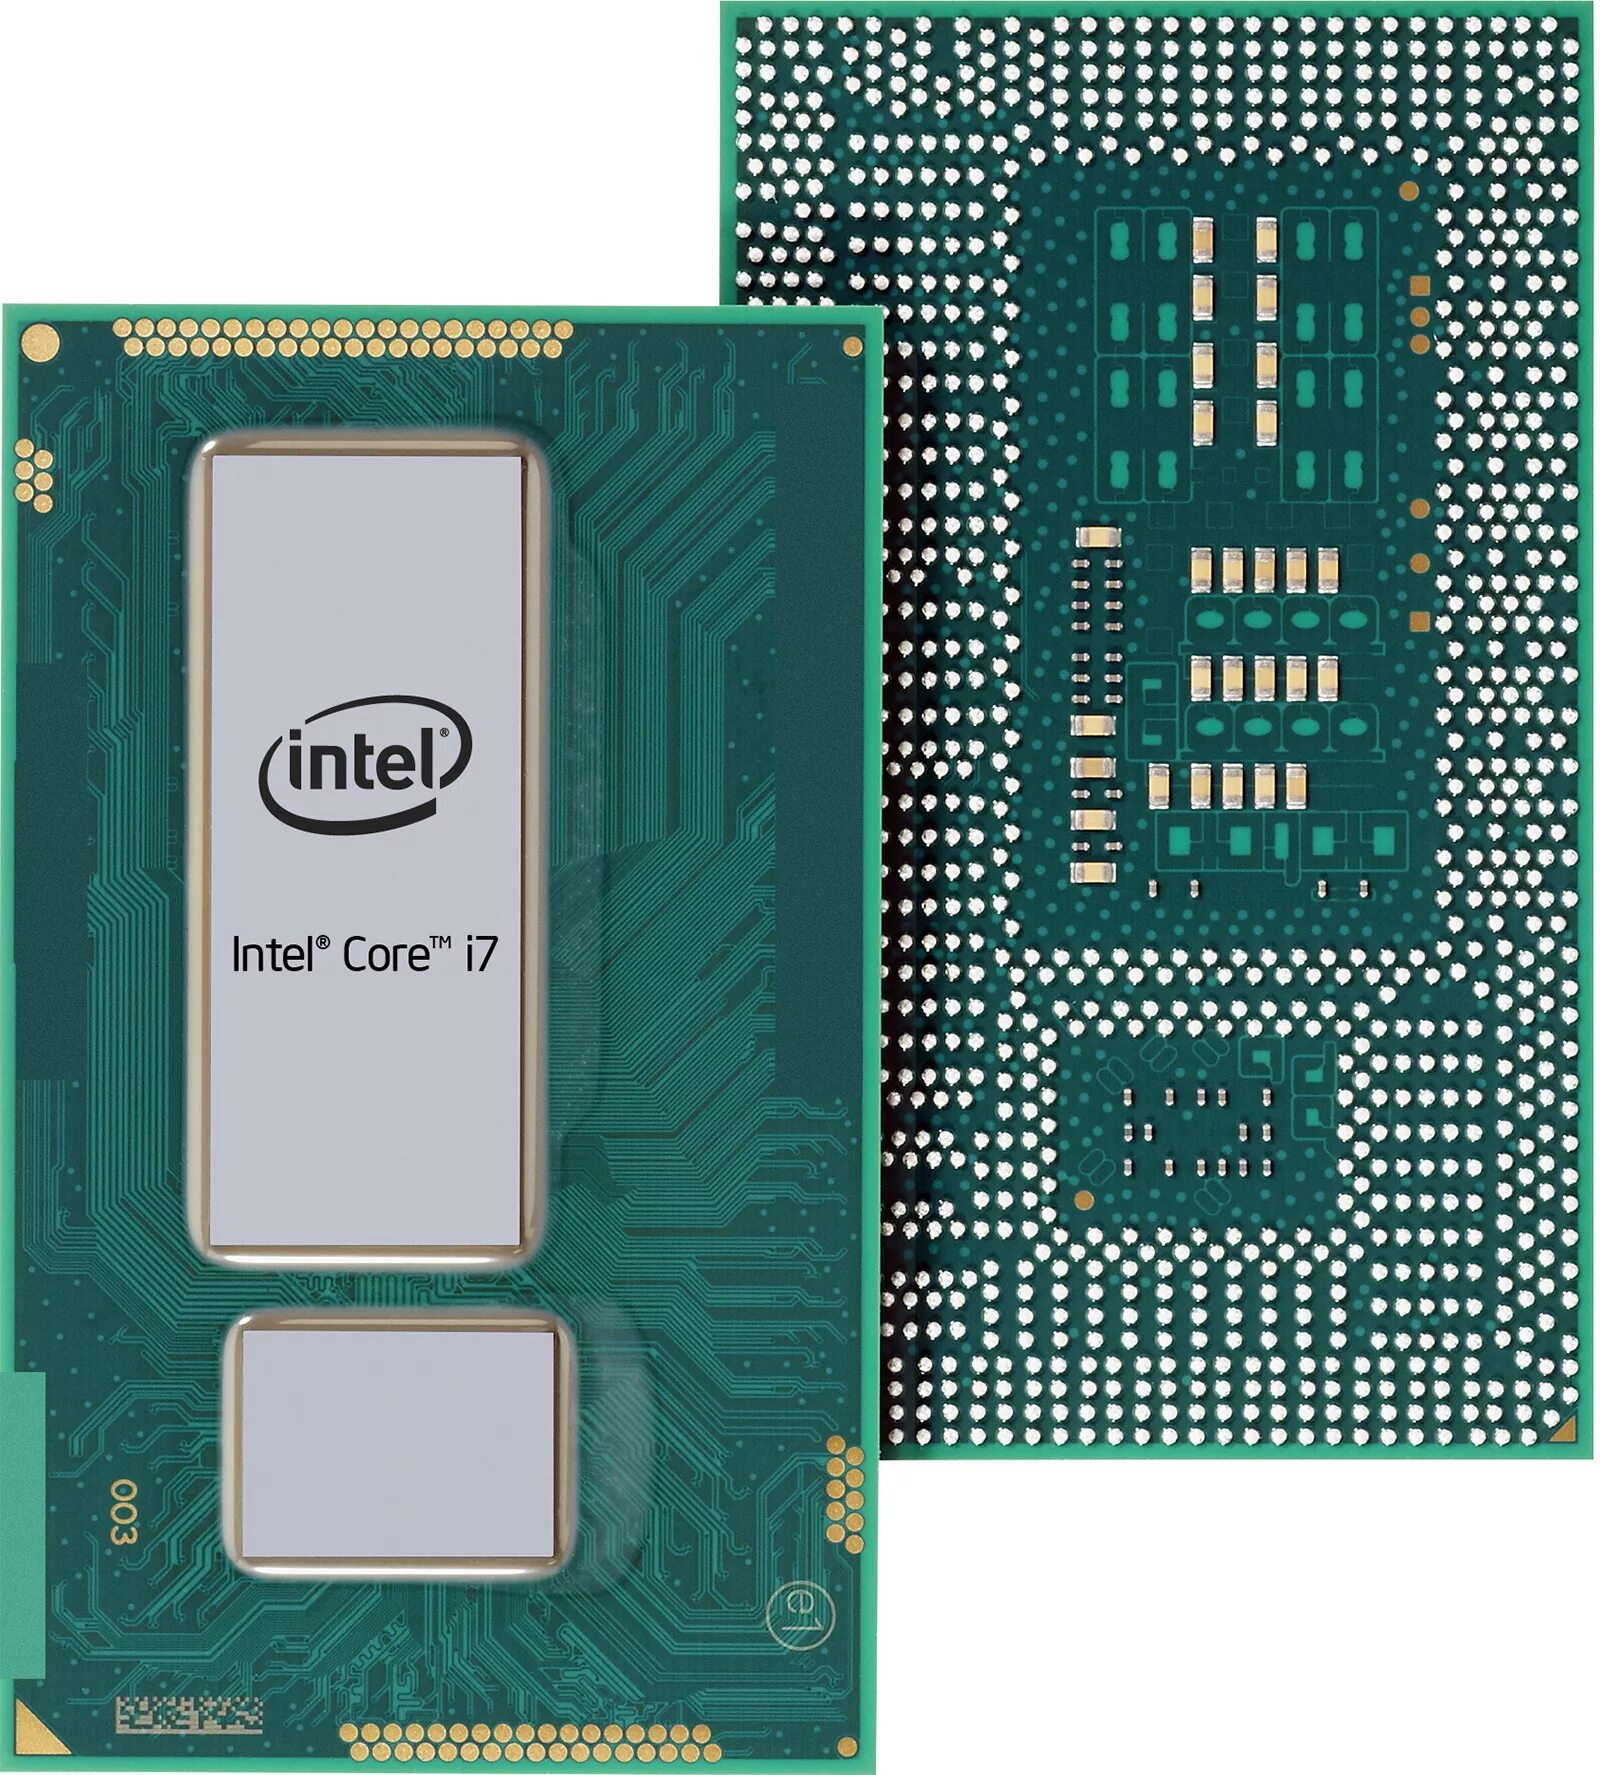 Чип интел. Процессор Intel Haswell. Core i5 мобильный процессор Intel. Чип Core i5. Мобильный процессор для ноутбука Intel cor i5.